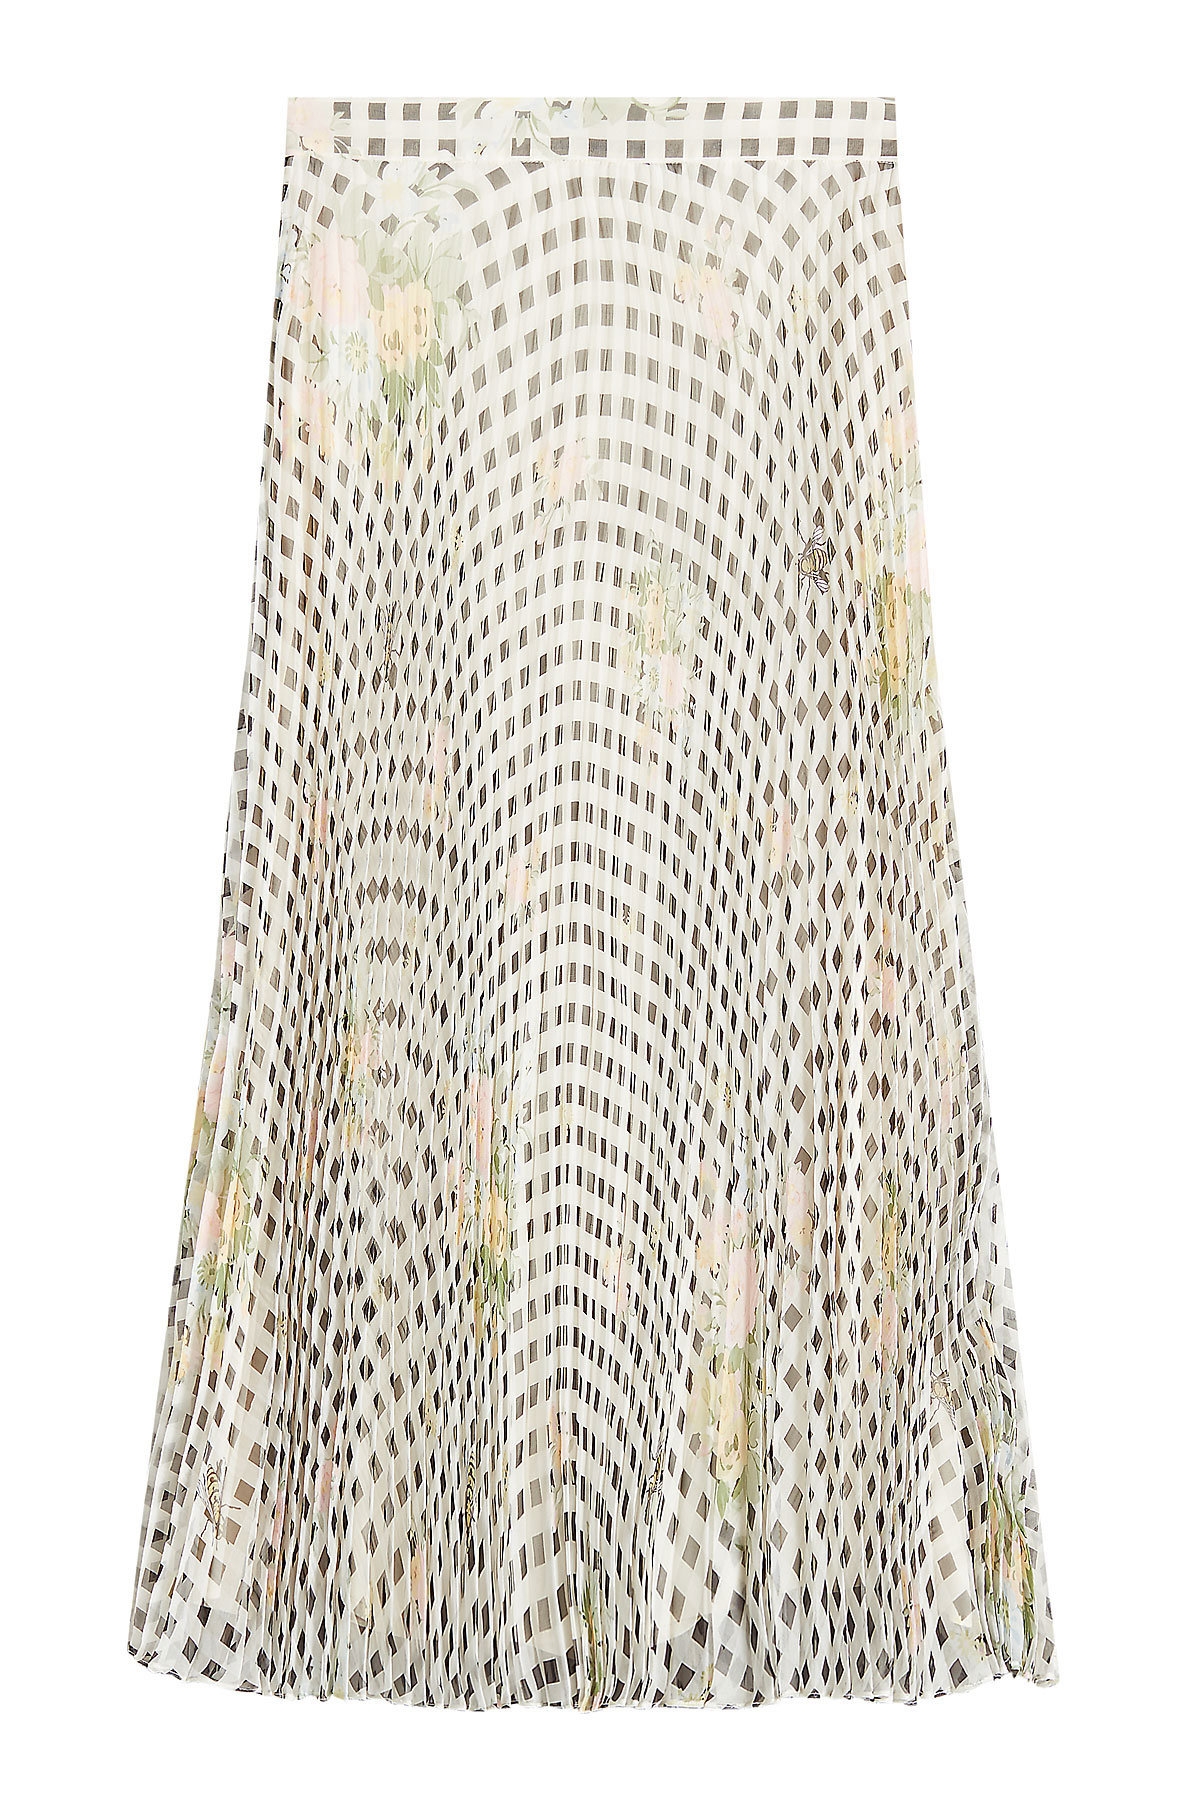 Christopher Kane - Gingham Organza Pleated Silk Skirt